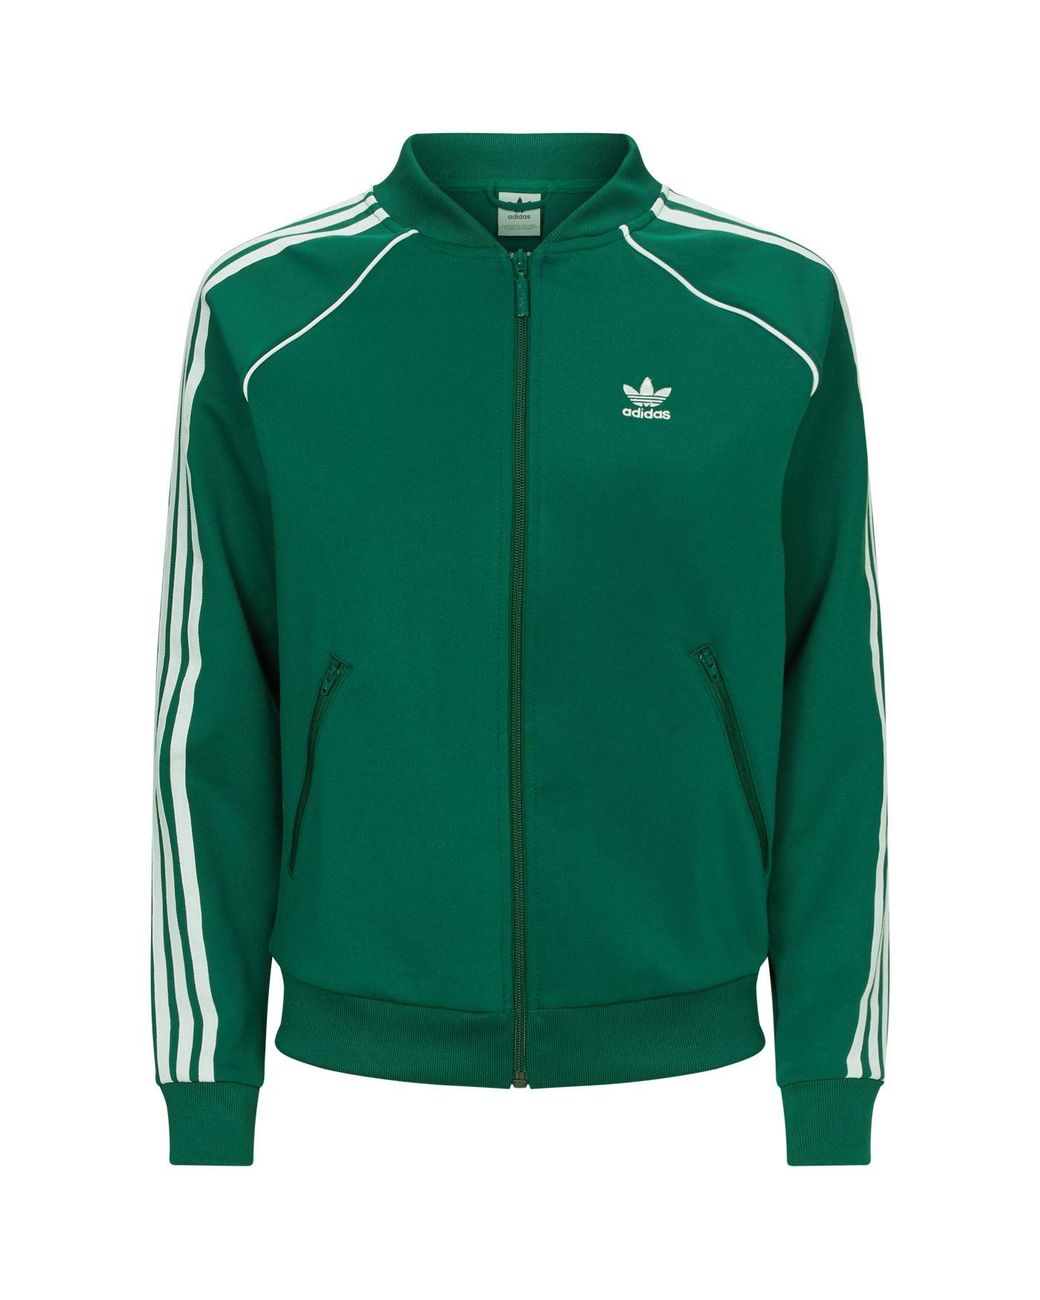 adidas Originals Sst Track Jacket in Green | Lyst